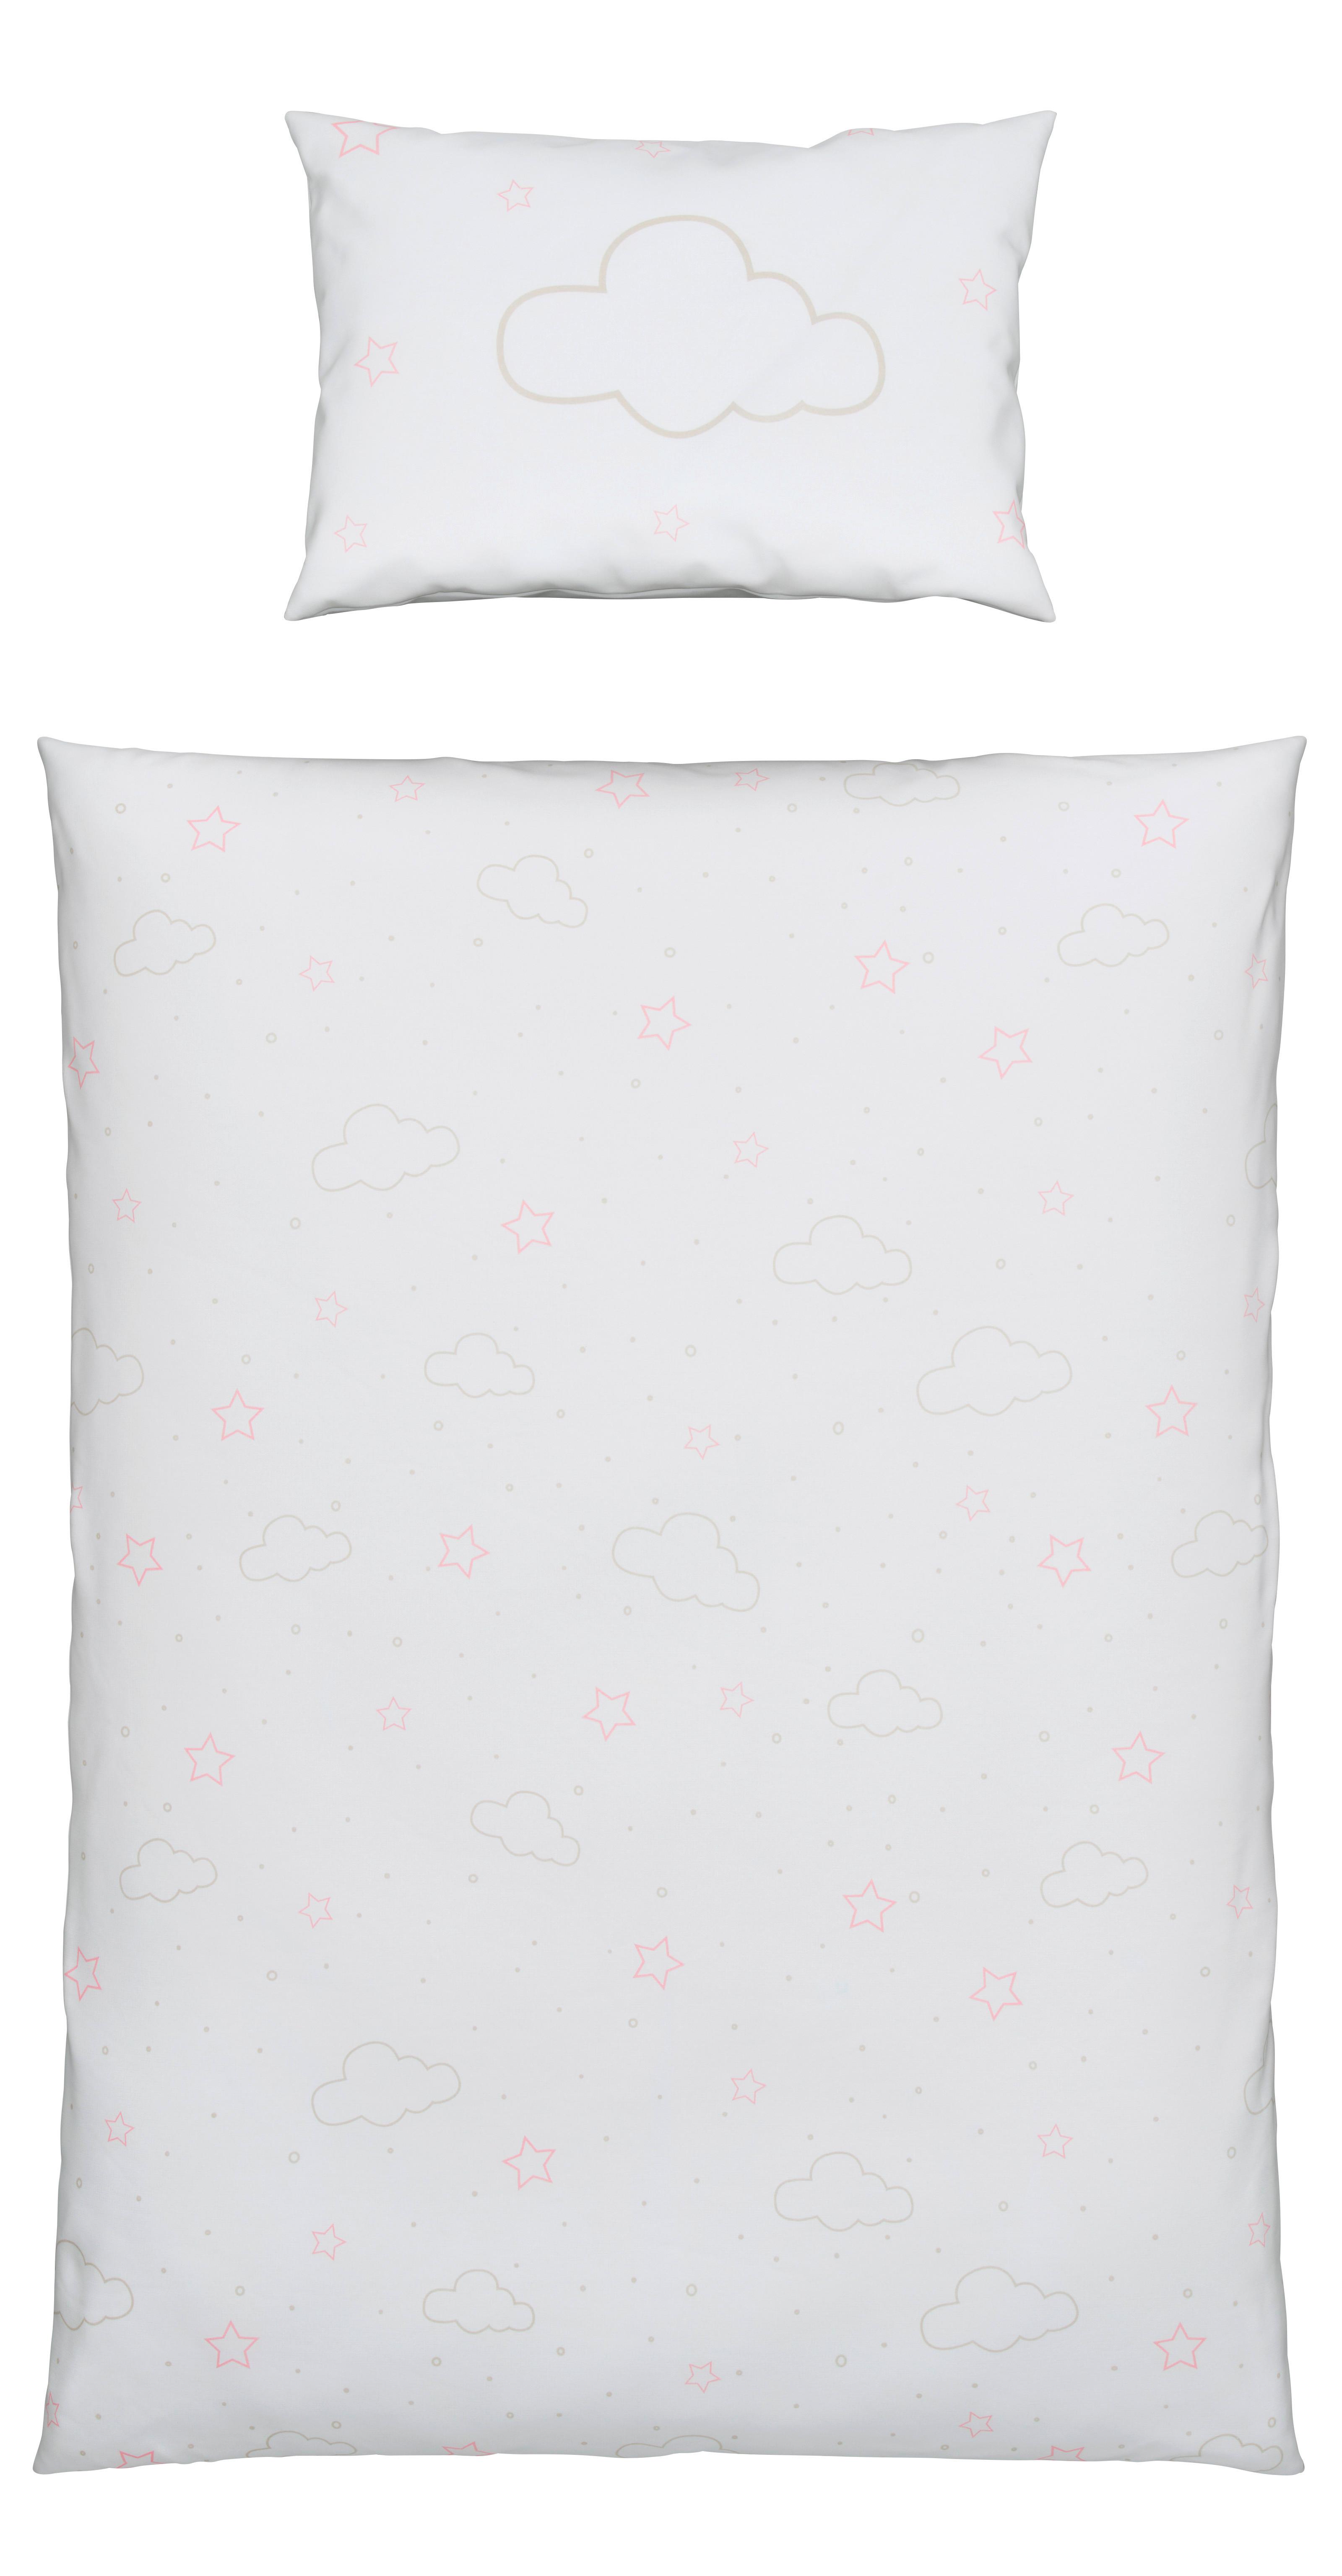 Kinderbettwäsche Rosalinda in Weiß/Pink ca. 100x135cm - Pink, Basics, Textil (100/135cm) - Bessagi Kids